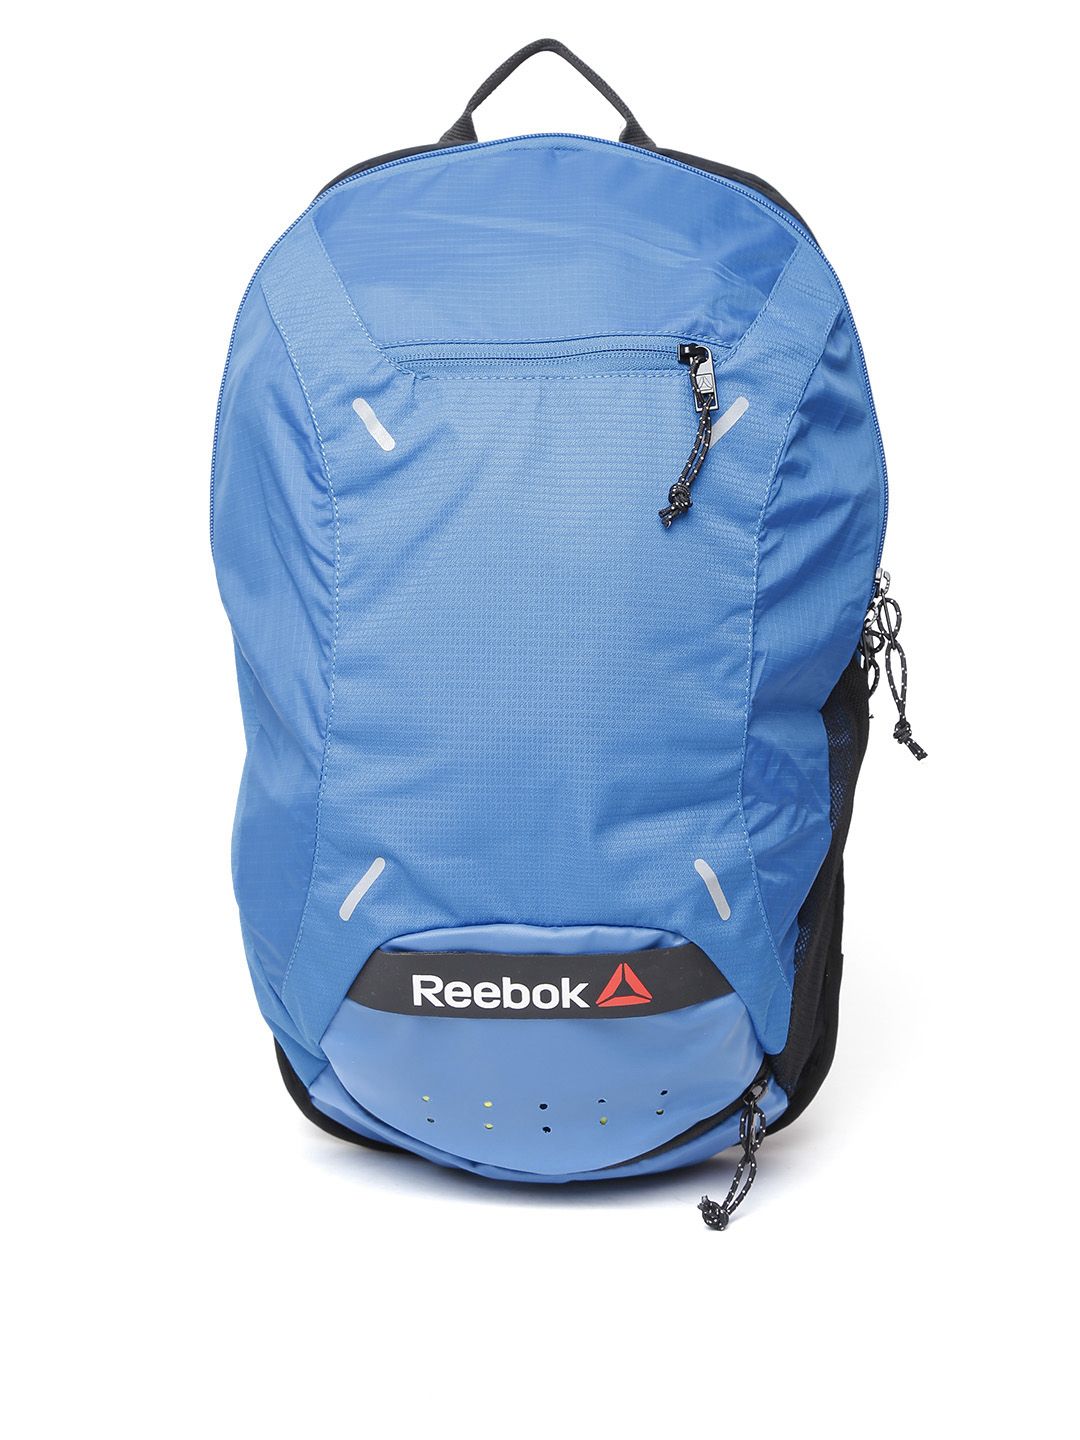 reebok backpacks online india Sale,up 